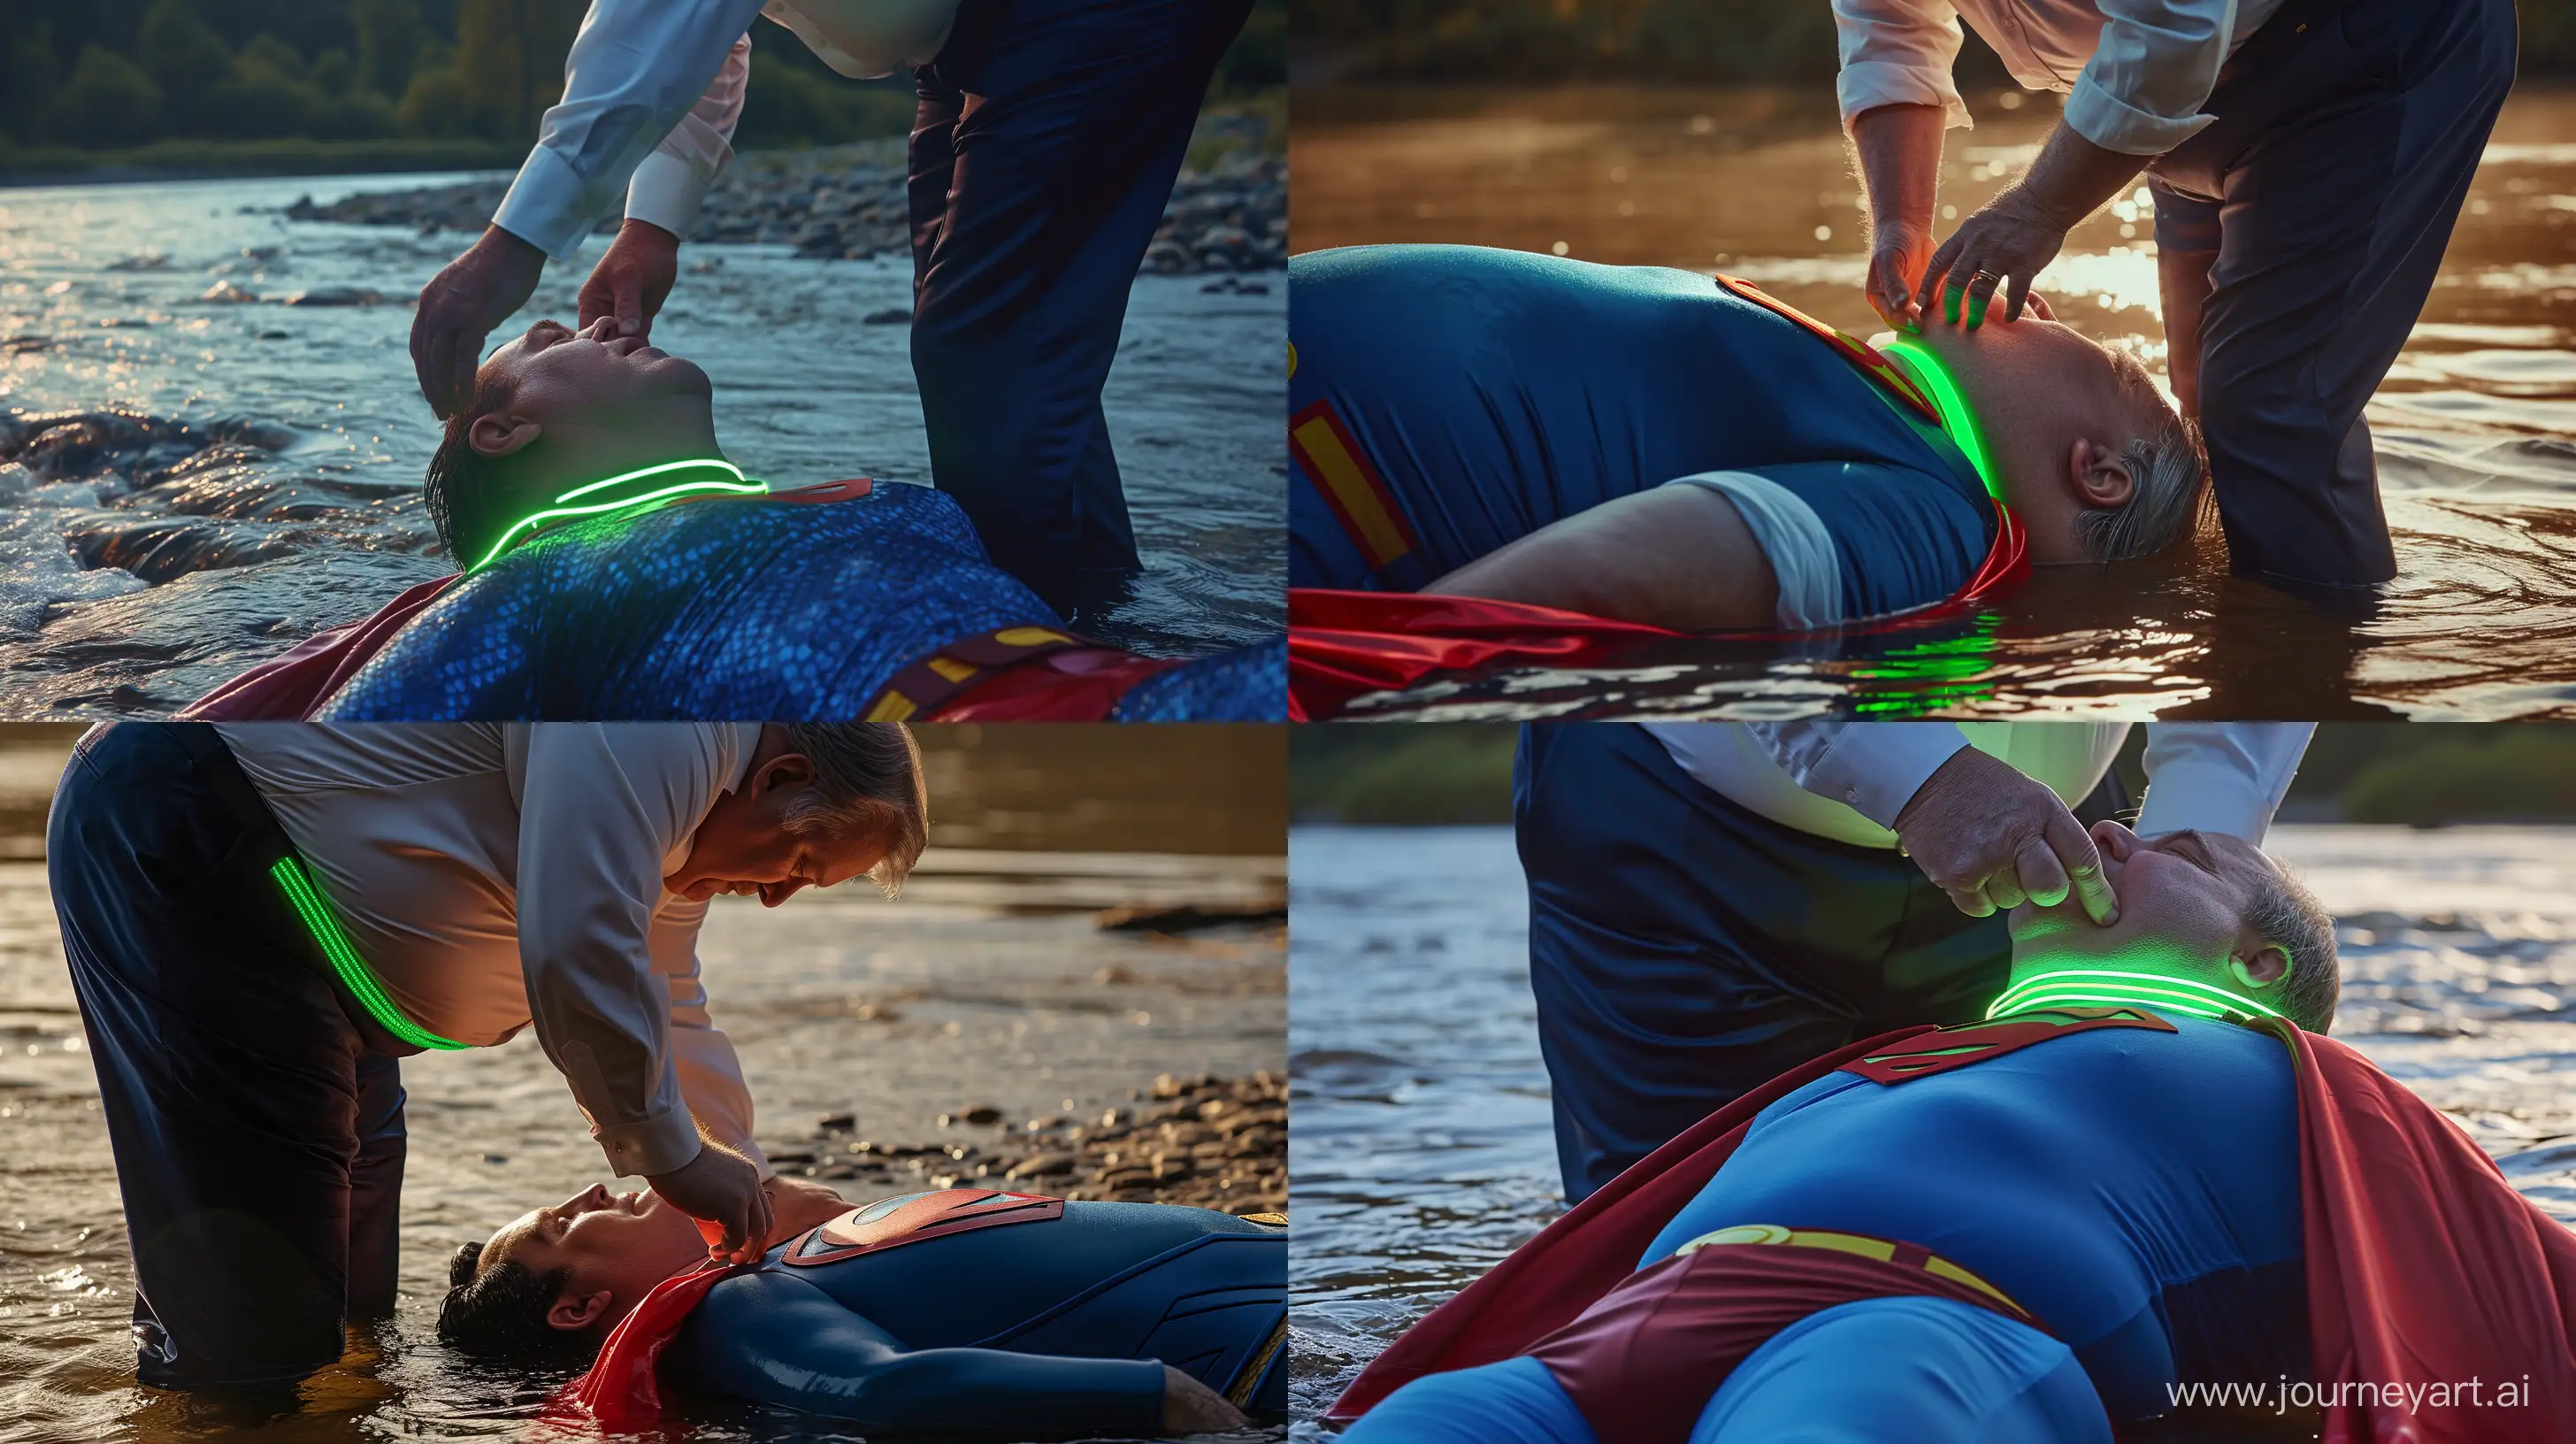 Eccentric-Superhero-in-Neon-Collar-Quirky-River-Scene-with-a-60YearOld-Man